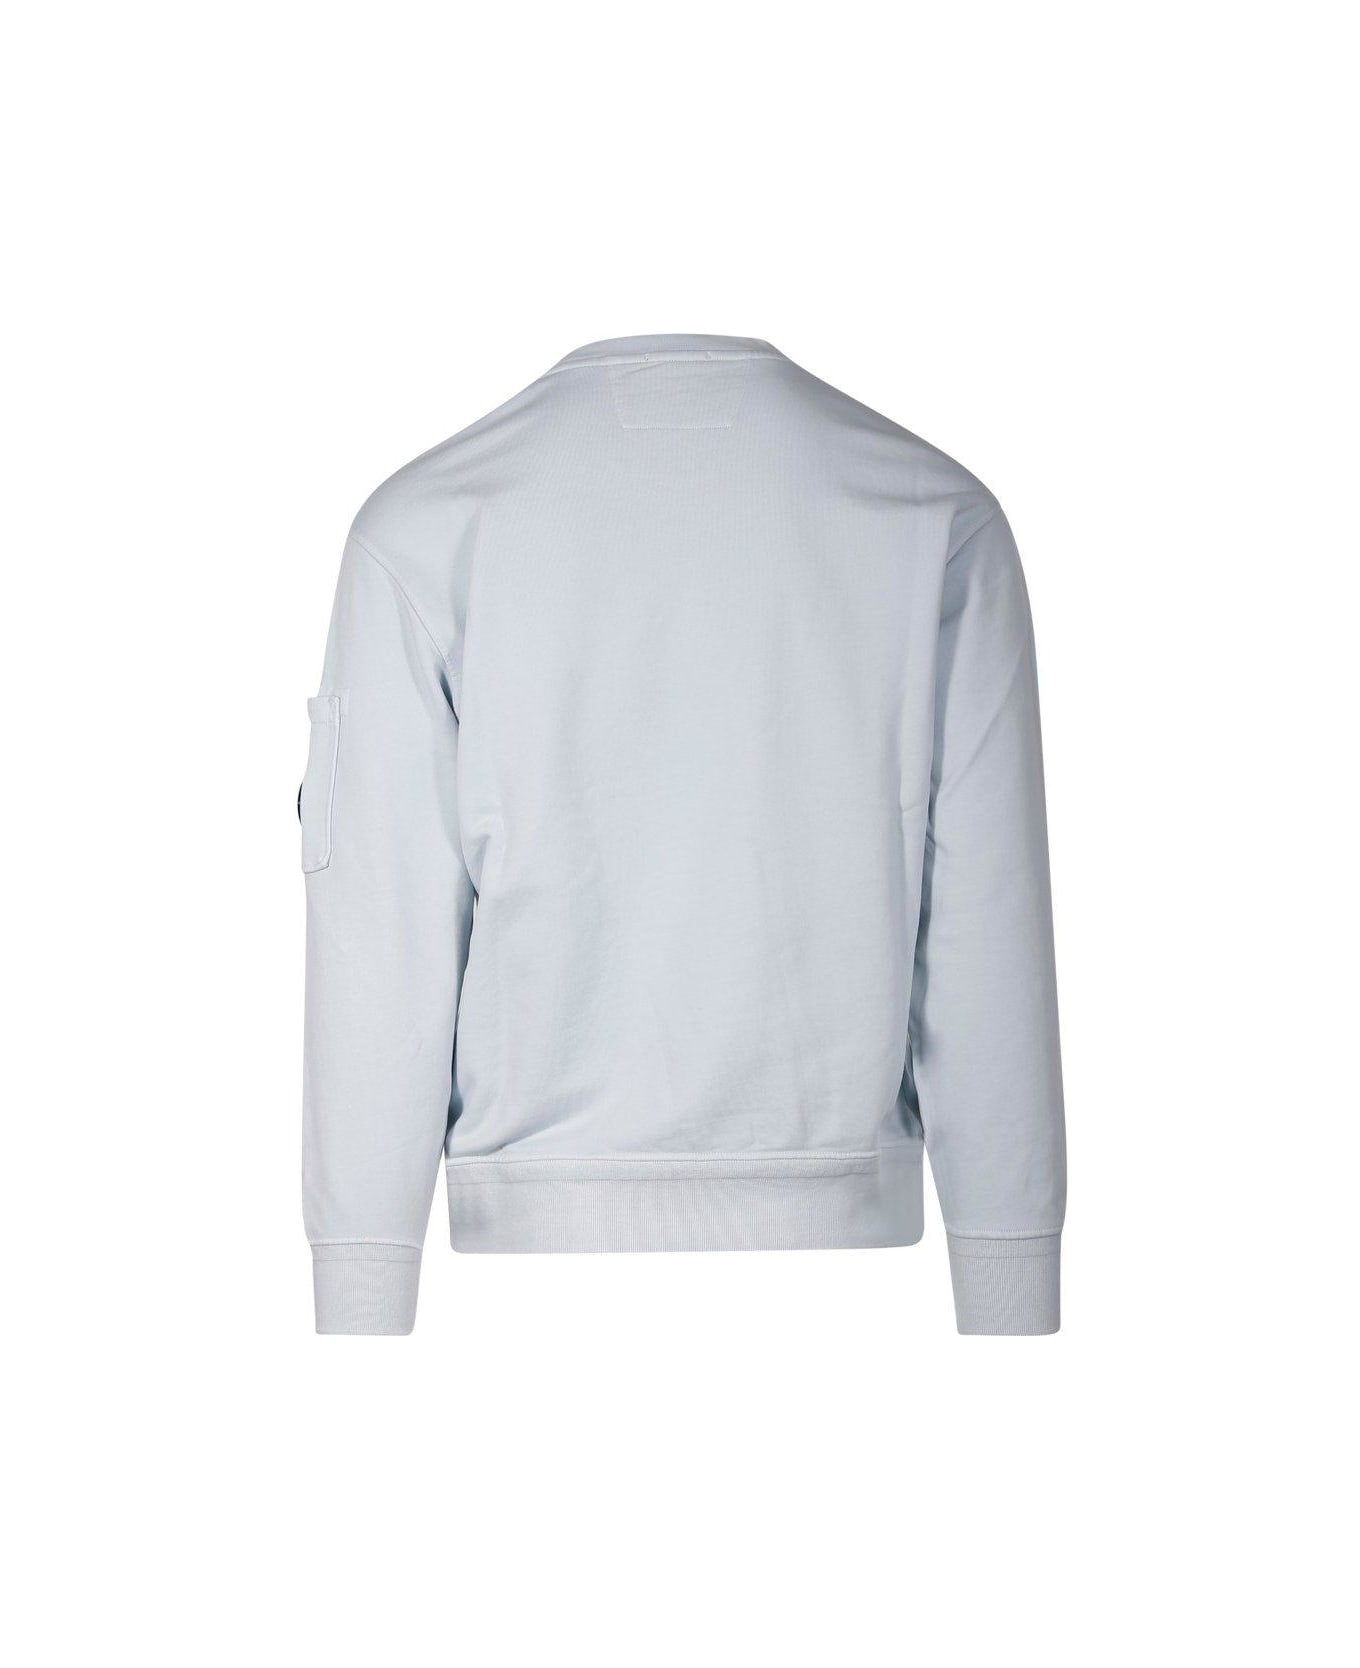 C.P. Company Crewneck Sleeved Sweatshirt - BLUE フリース